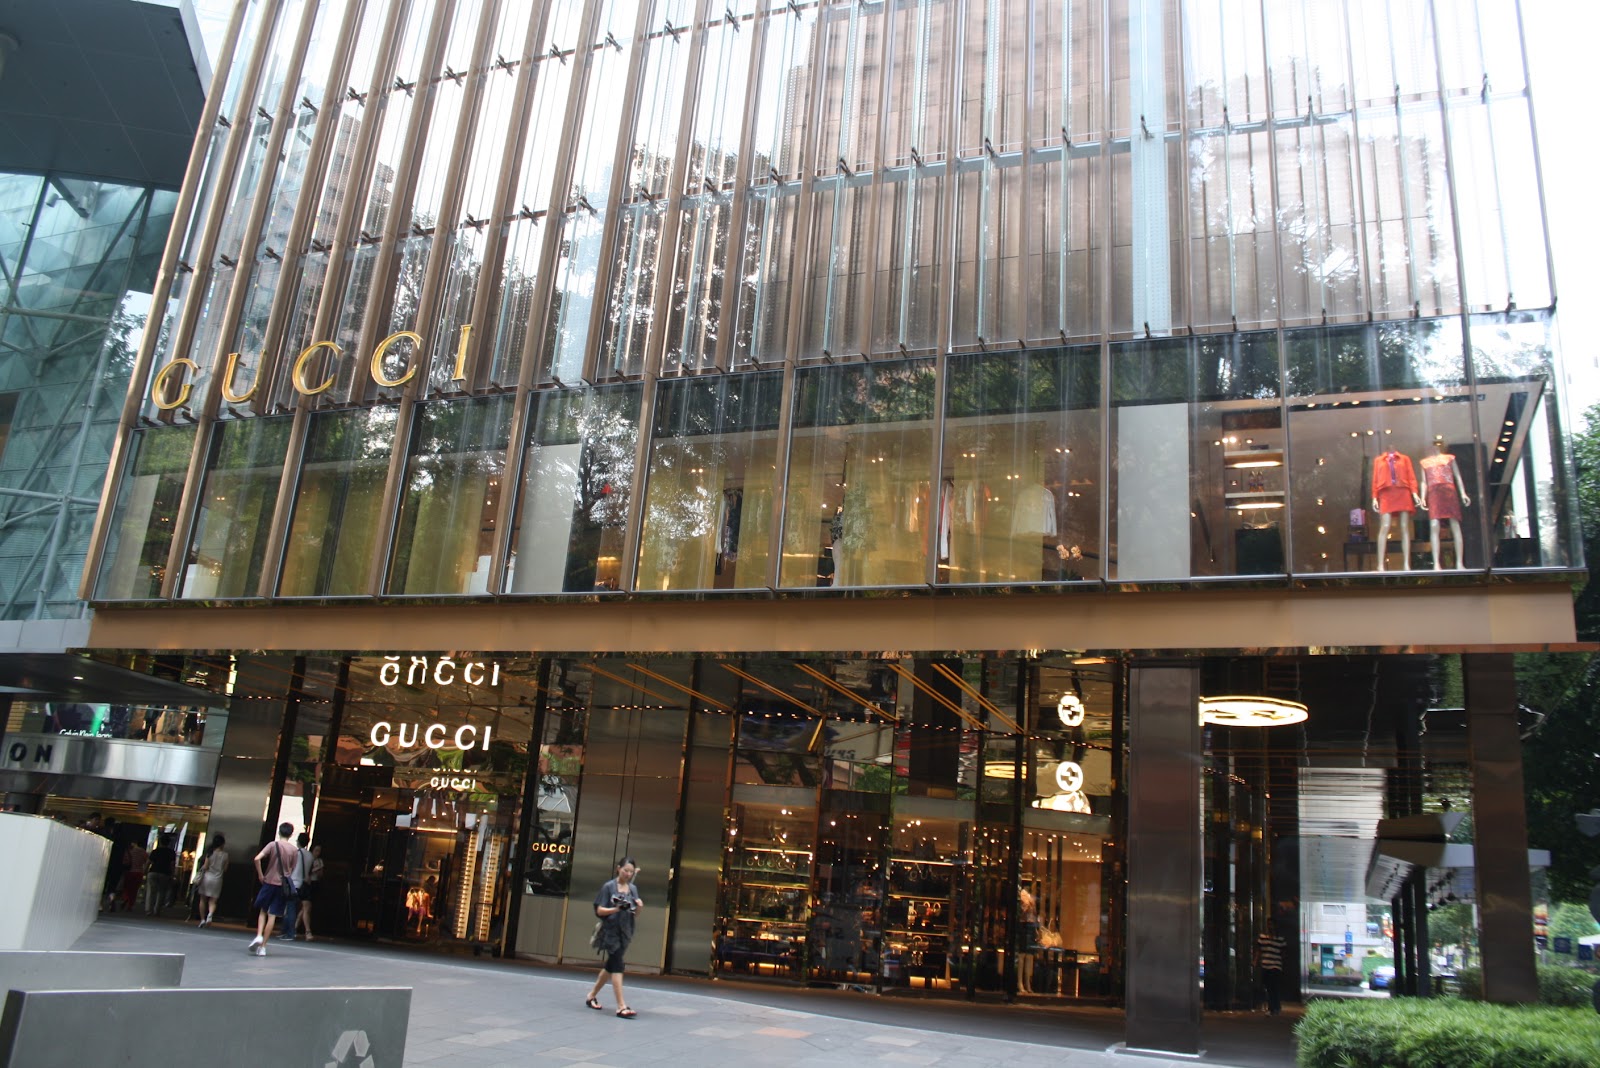 displayhunter: Singapore: The little world of luxury shoppings